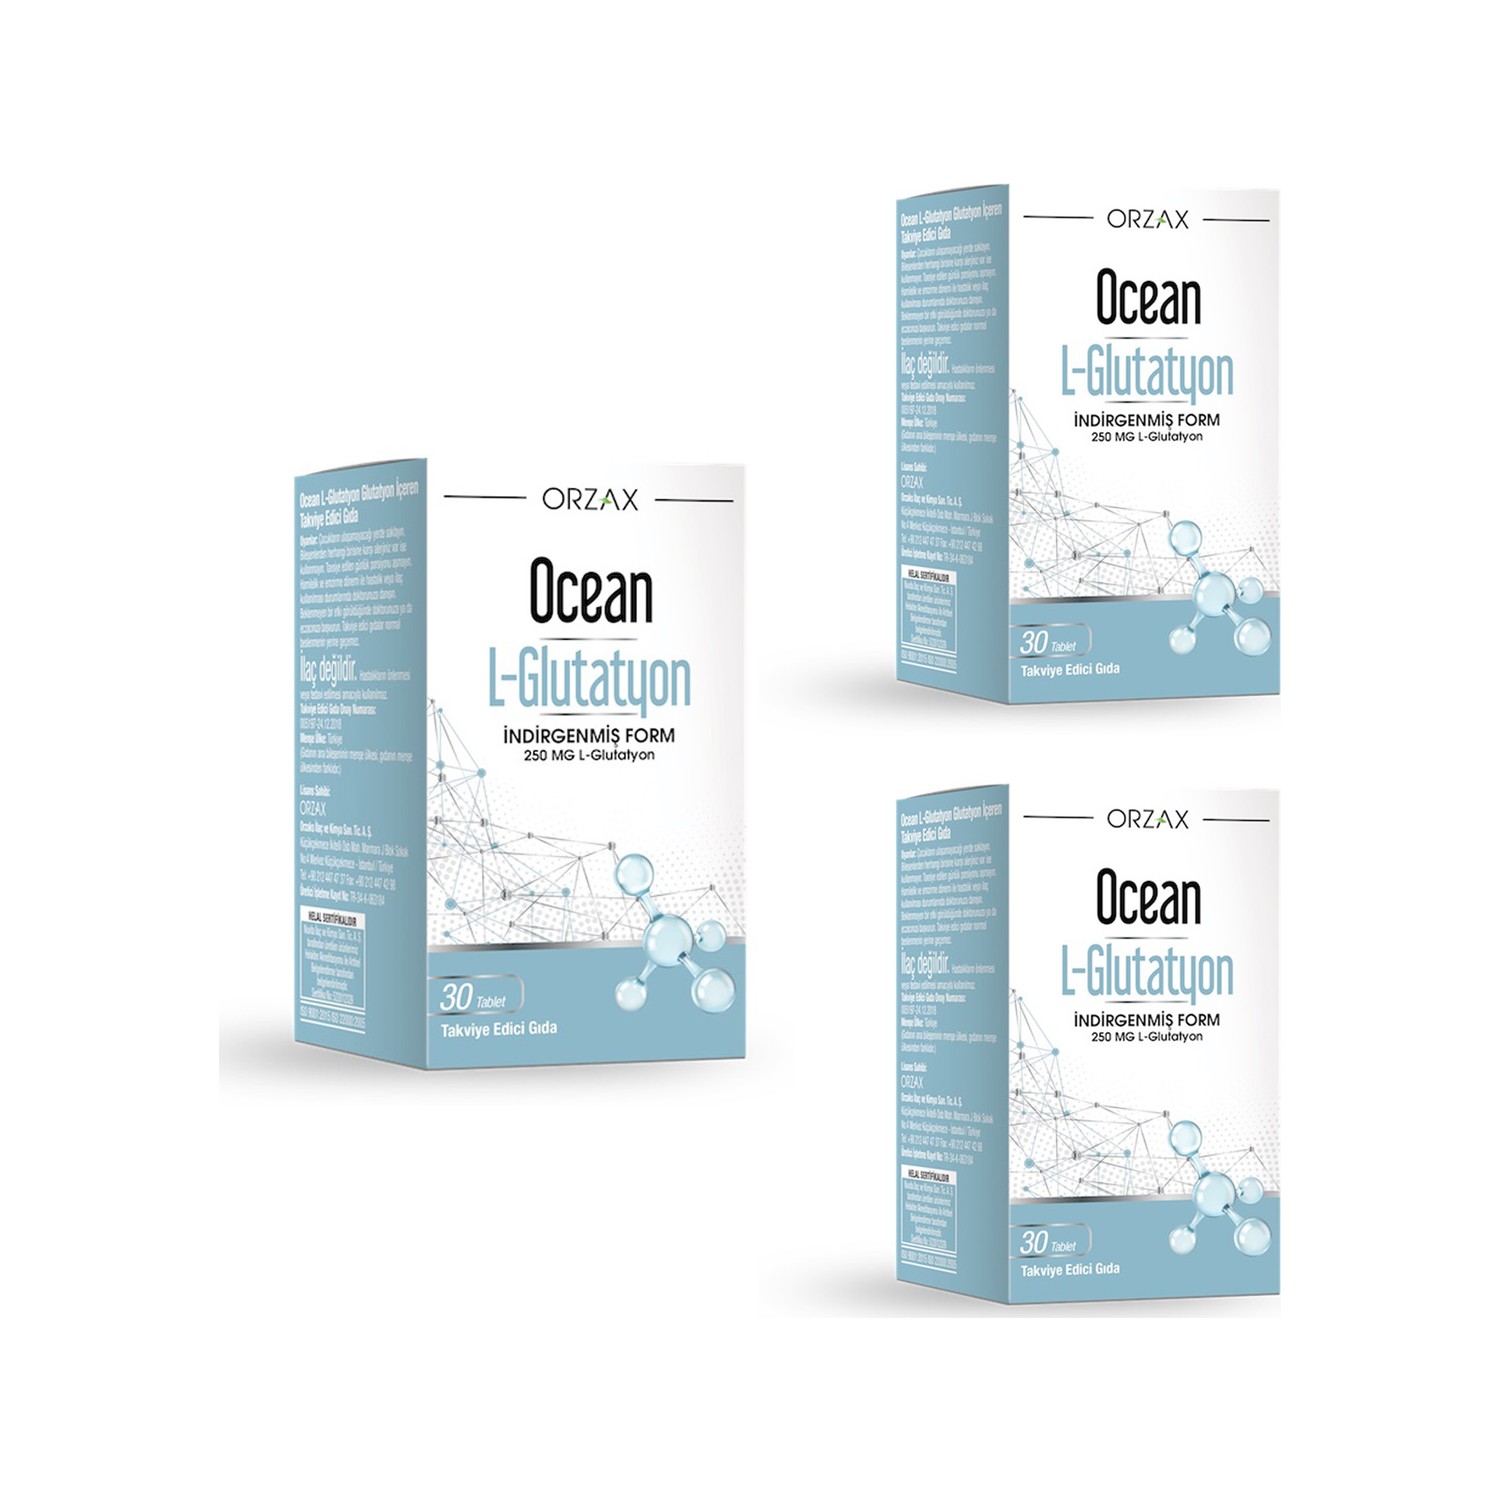 L-глутатион Ocean 250 мг, 3 упаковки по 30 таблеток l глутатион orzax ocean 250 мг 2 упаковки по 30 таблеток